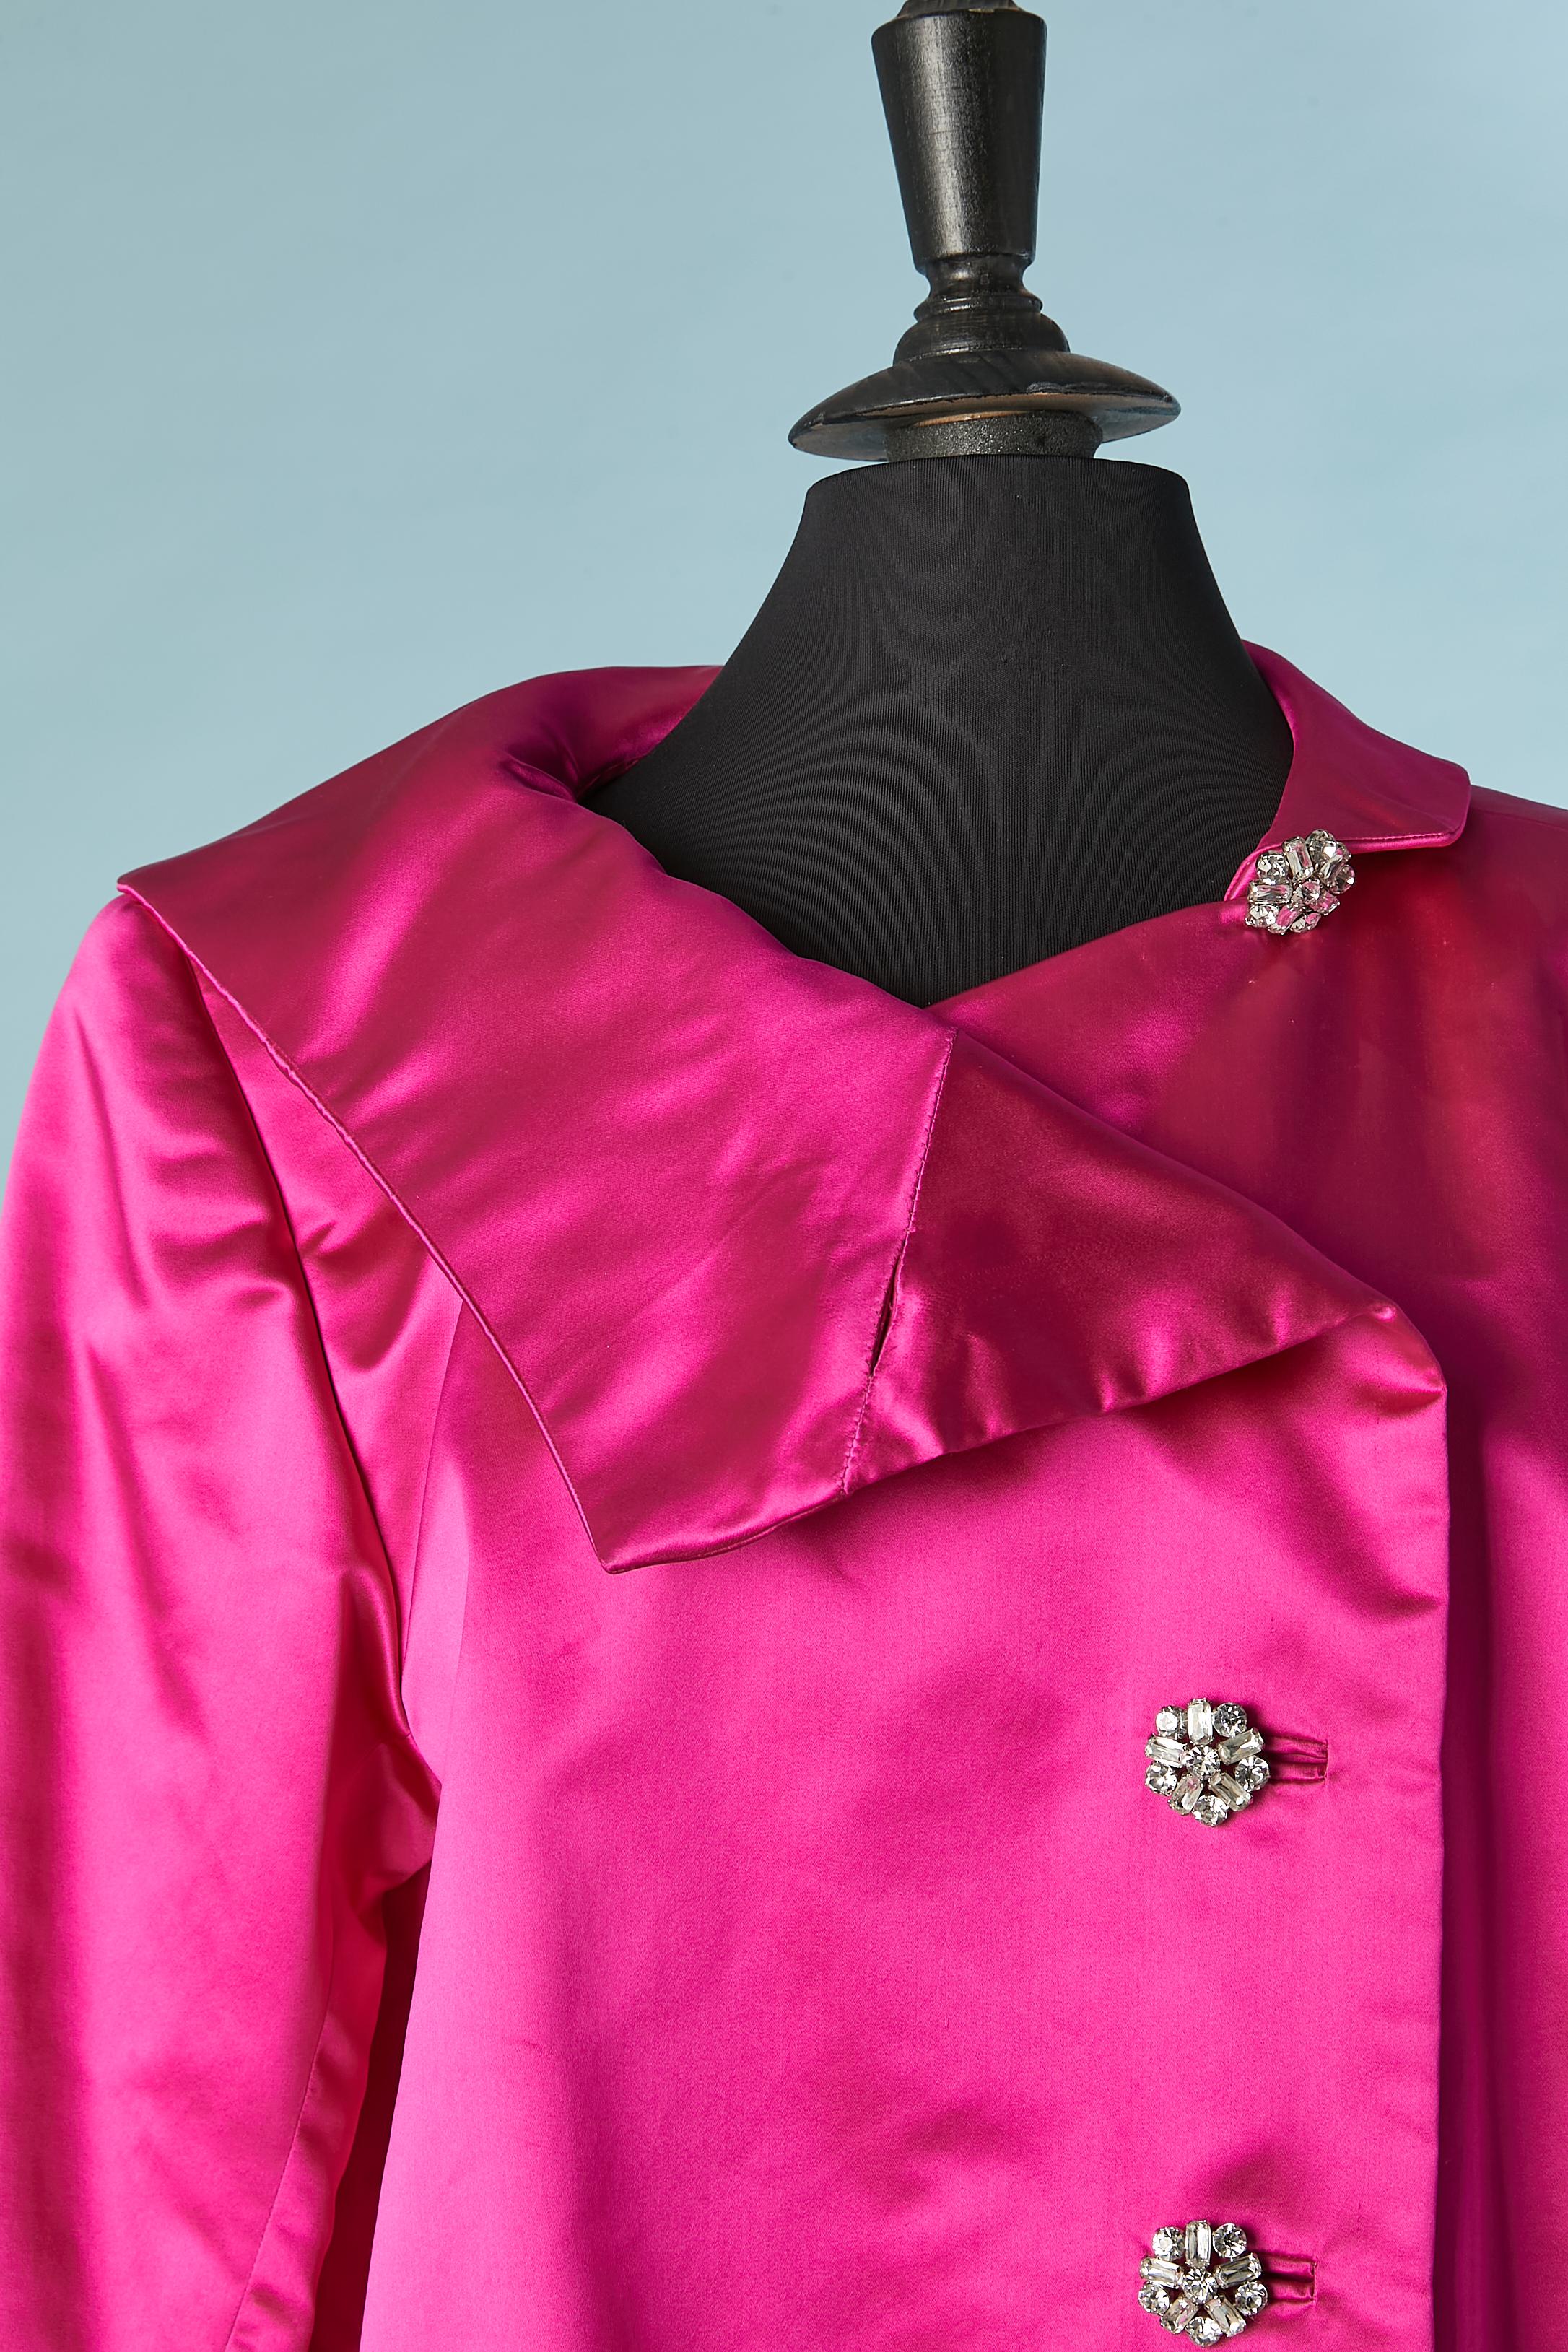 Fushia satin evening jacket with rhinestone button Cavalli Faenza Circa 1960's  For Sale 3